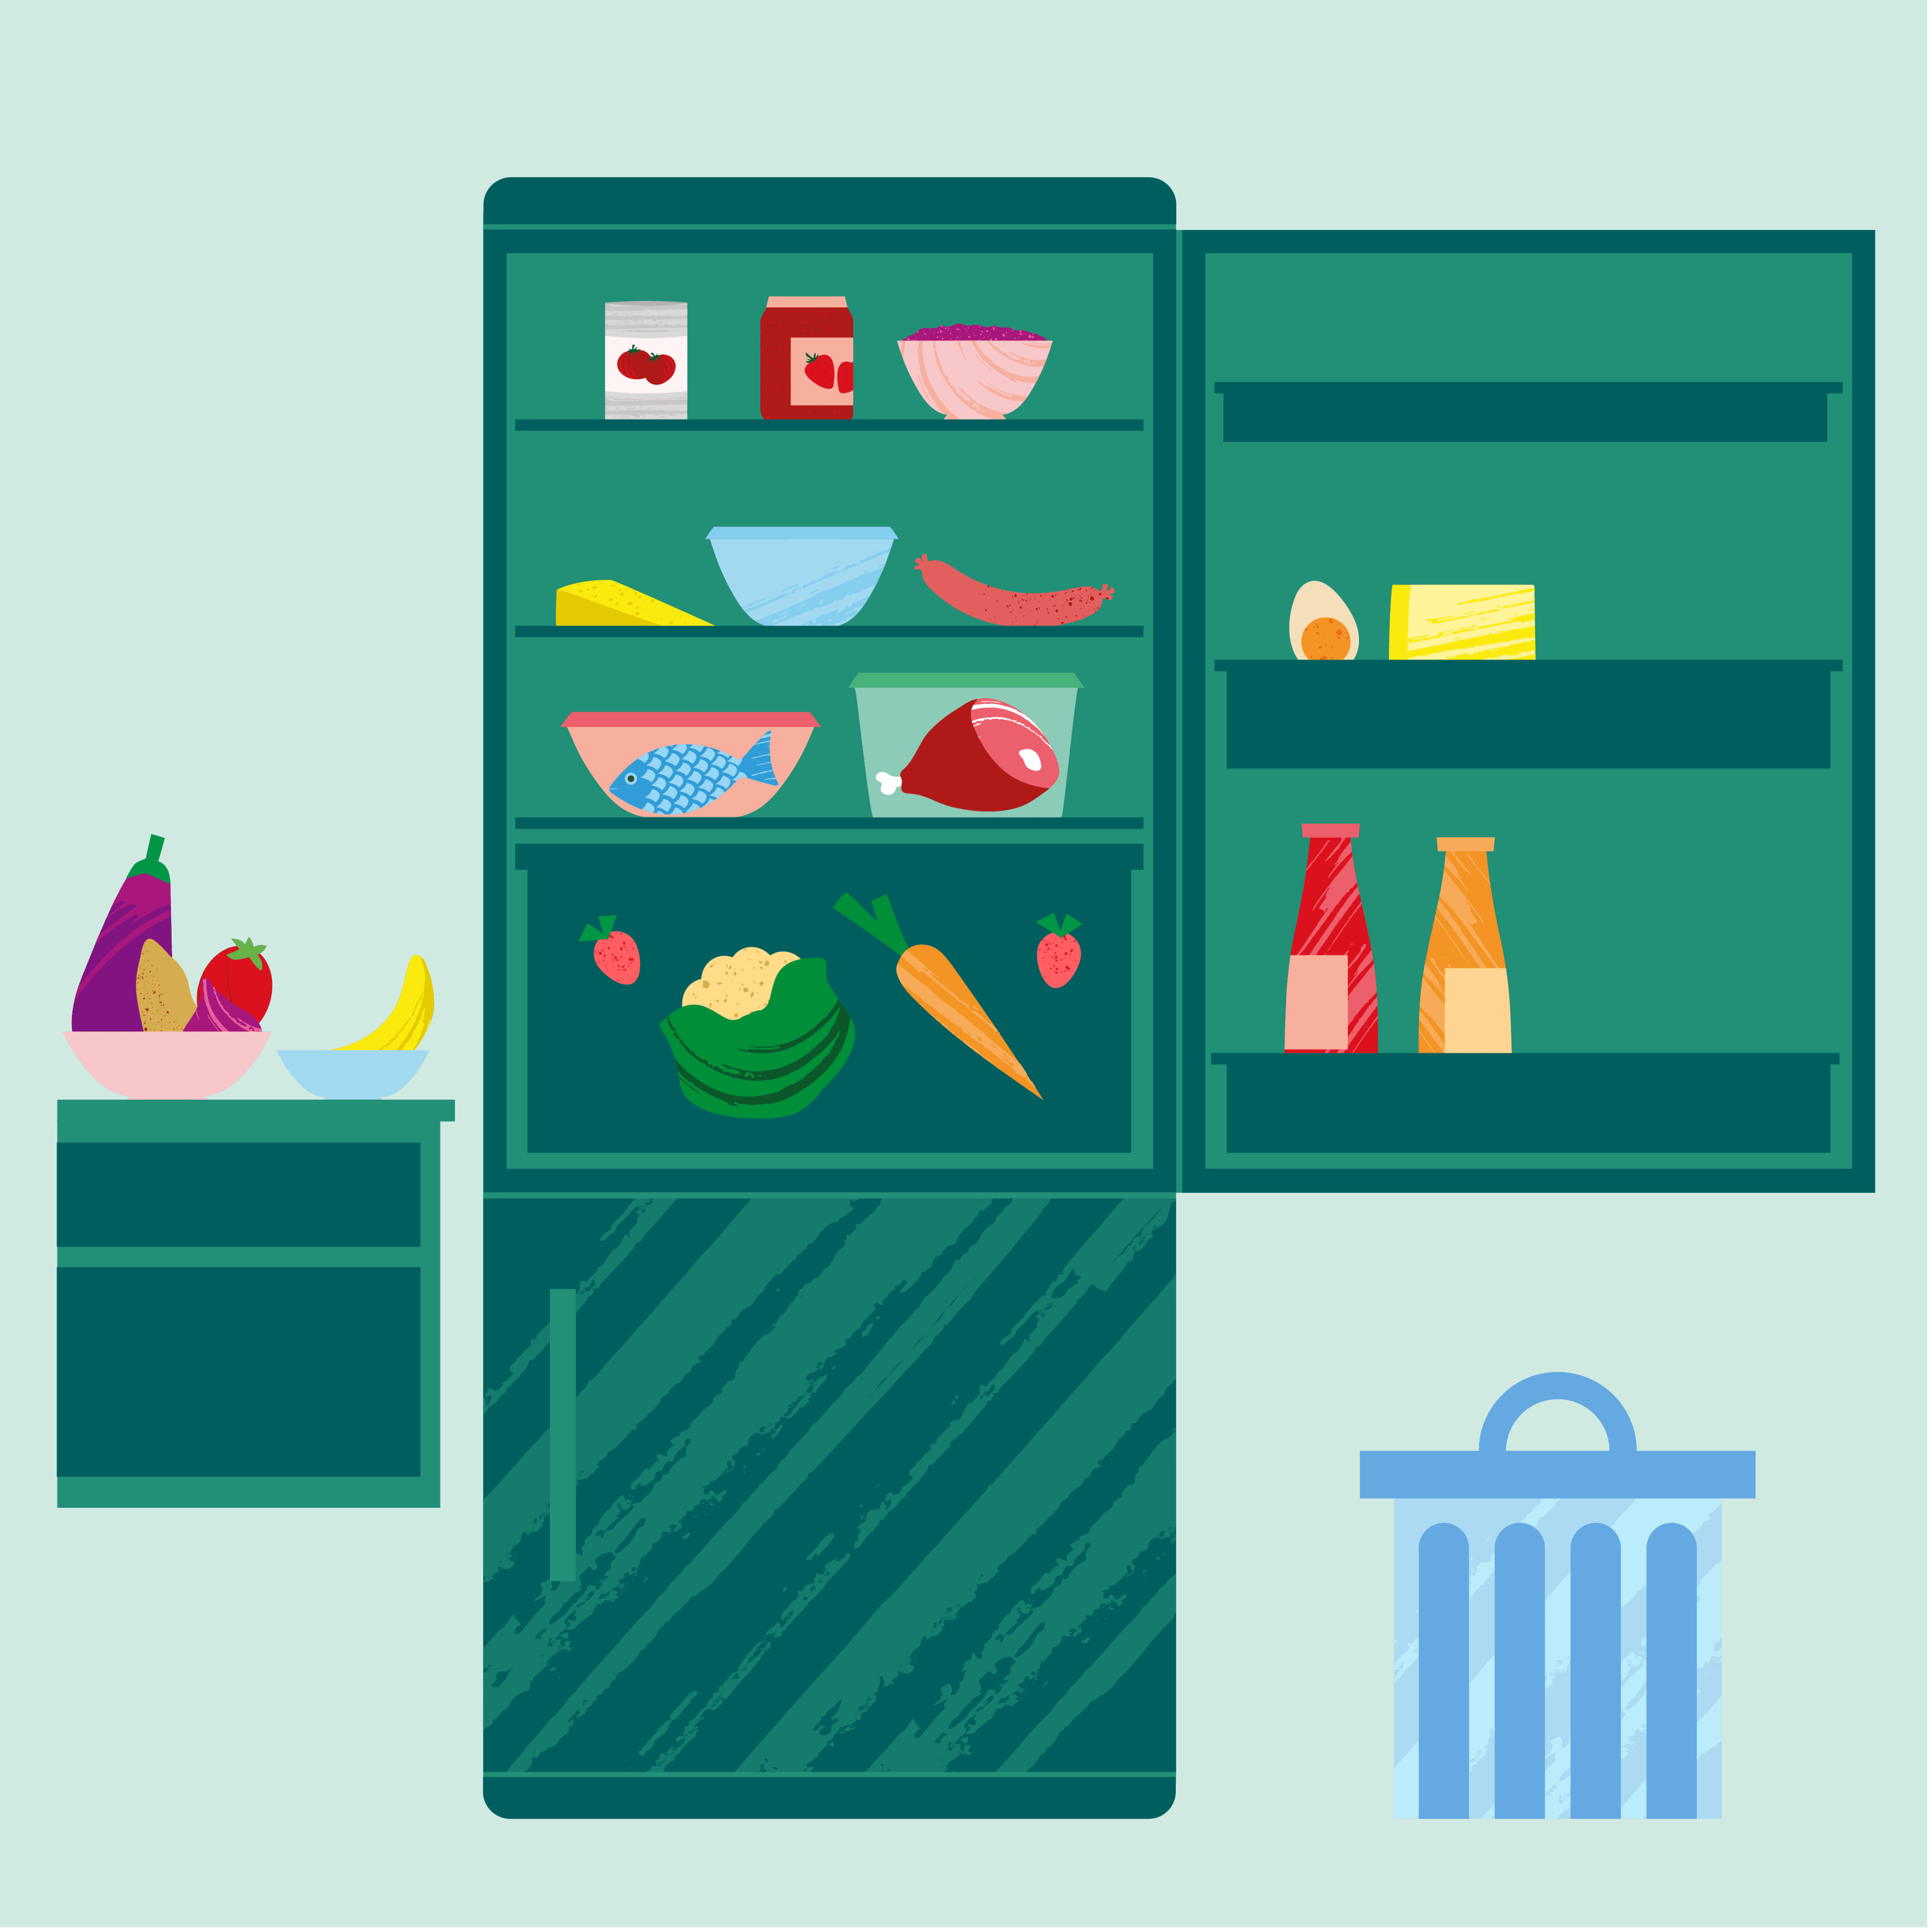 Moet alles in de koelkast?